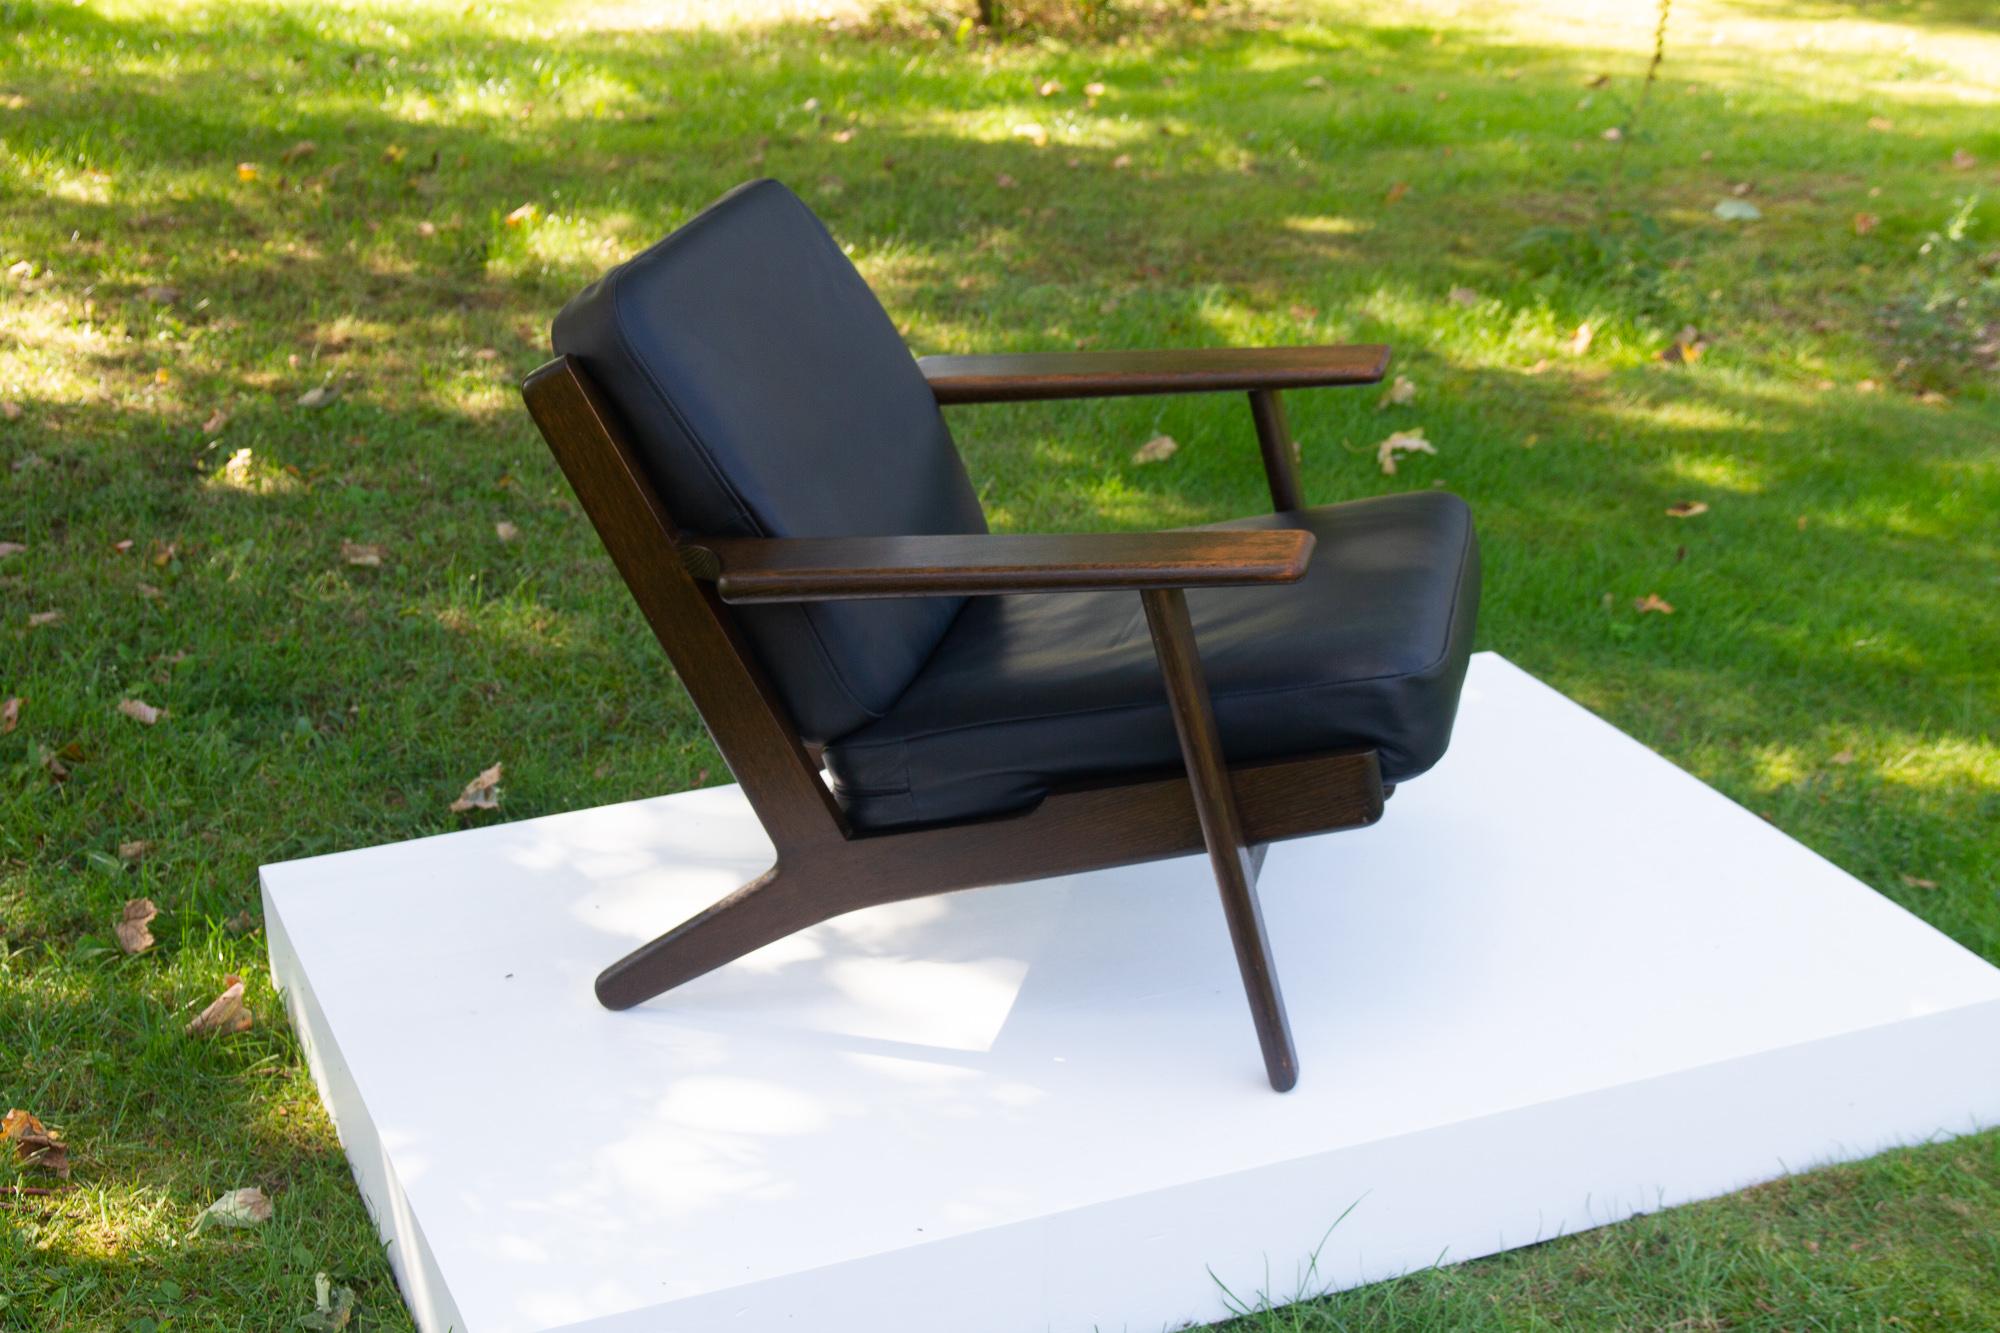 Vintage Danish Dark Oak Lounge Chair GE 290 by Hans J. Wegner, 1970s
Mid-century Modern Scandinavian armchair model GE-290 by Hans Wegner for Getama in solid oak. Spring cushions with black leather. 
This easy chair is a true Danish design